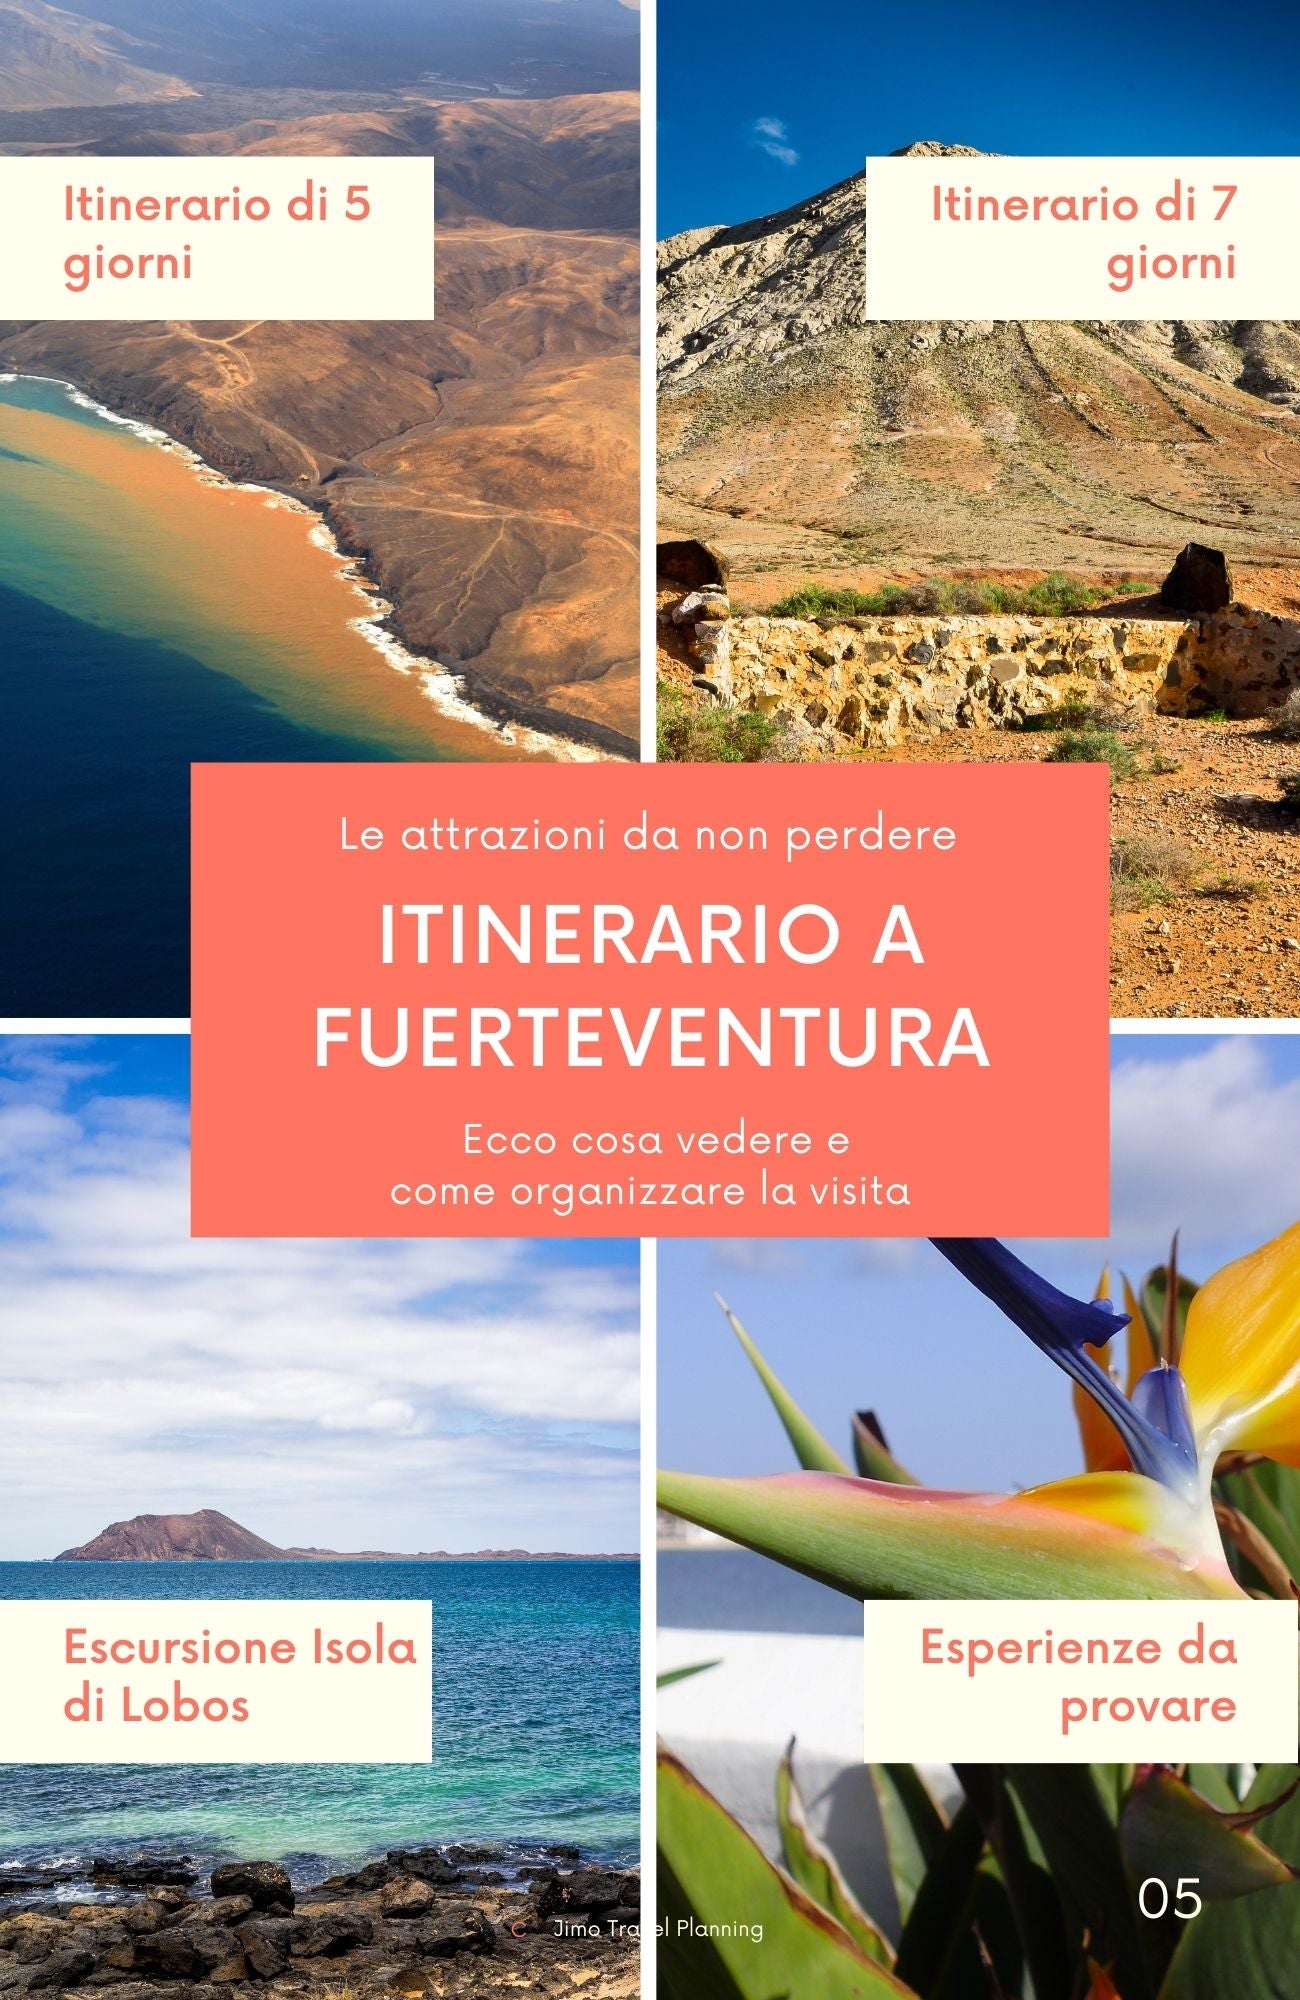 Itinerario viaggio a Fuerteventura, Spagna